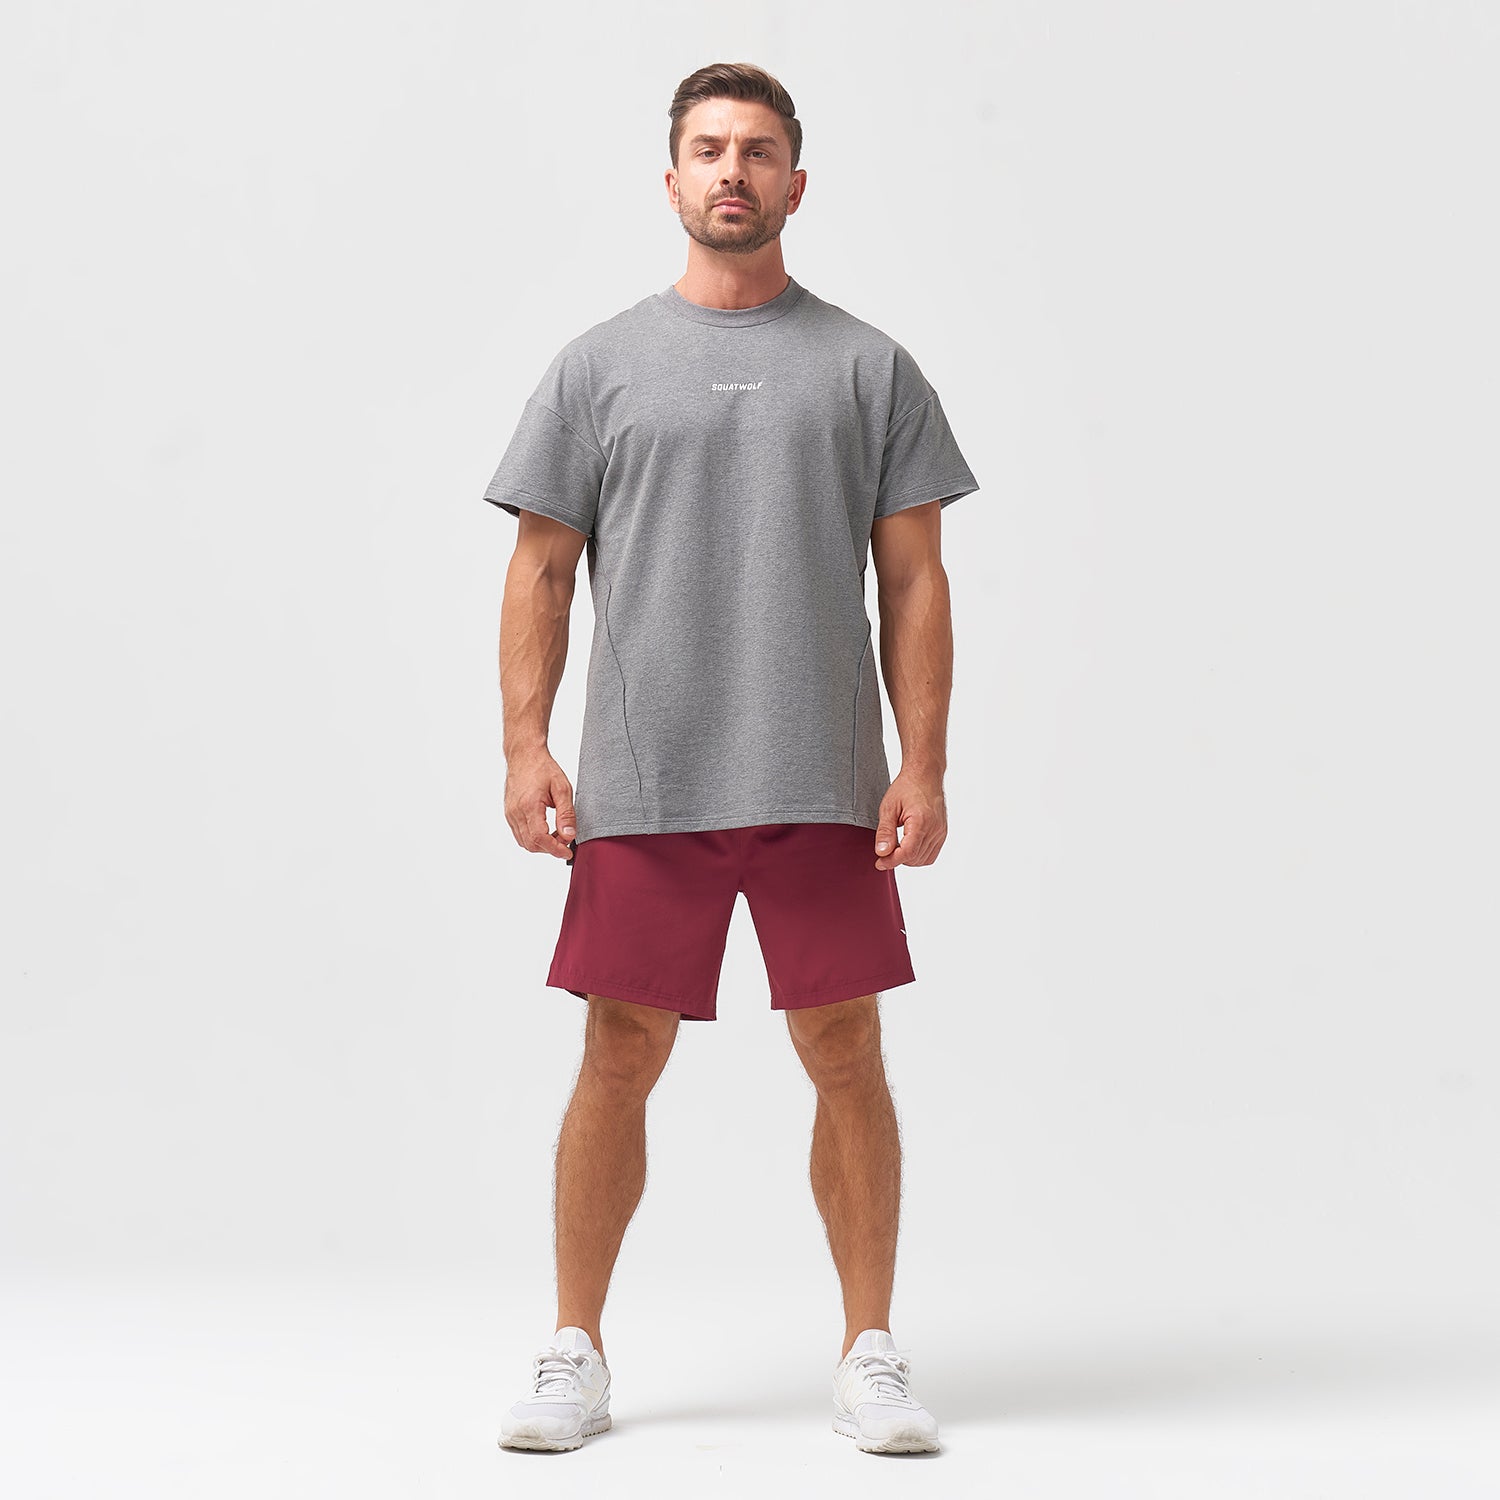 squatwolf-gym-wear-bodybuilding-tee-grey-workout-shirts-for-men